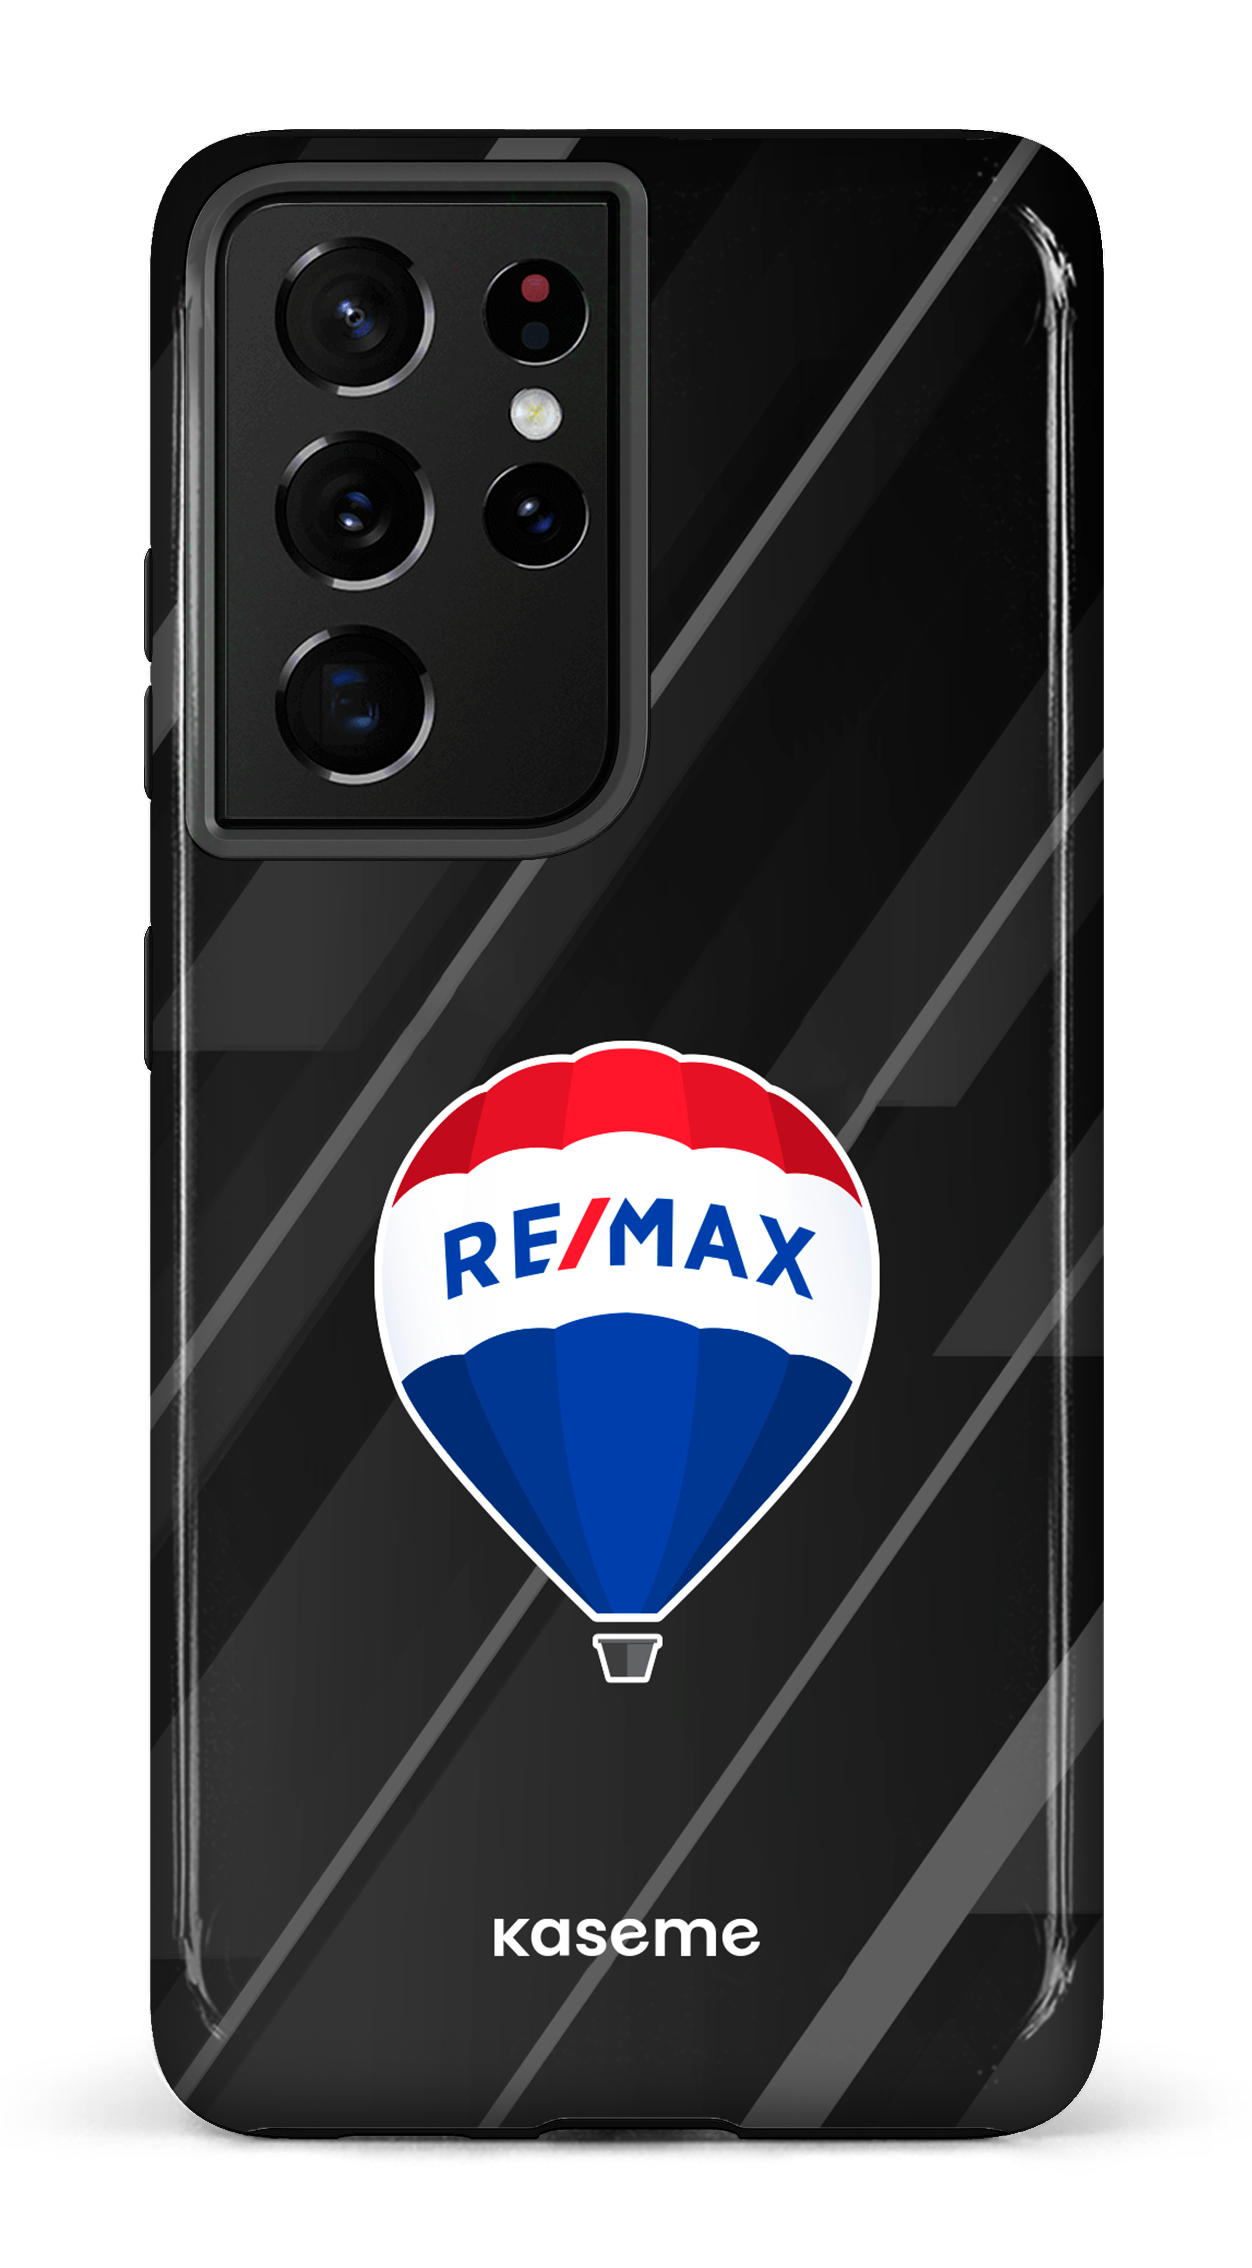 Remax Noir - Galaxy S21 Ultra